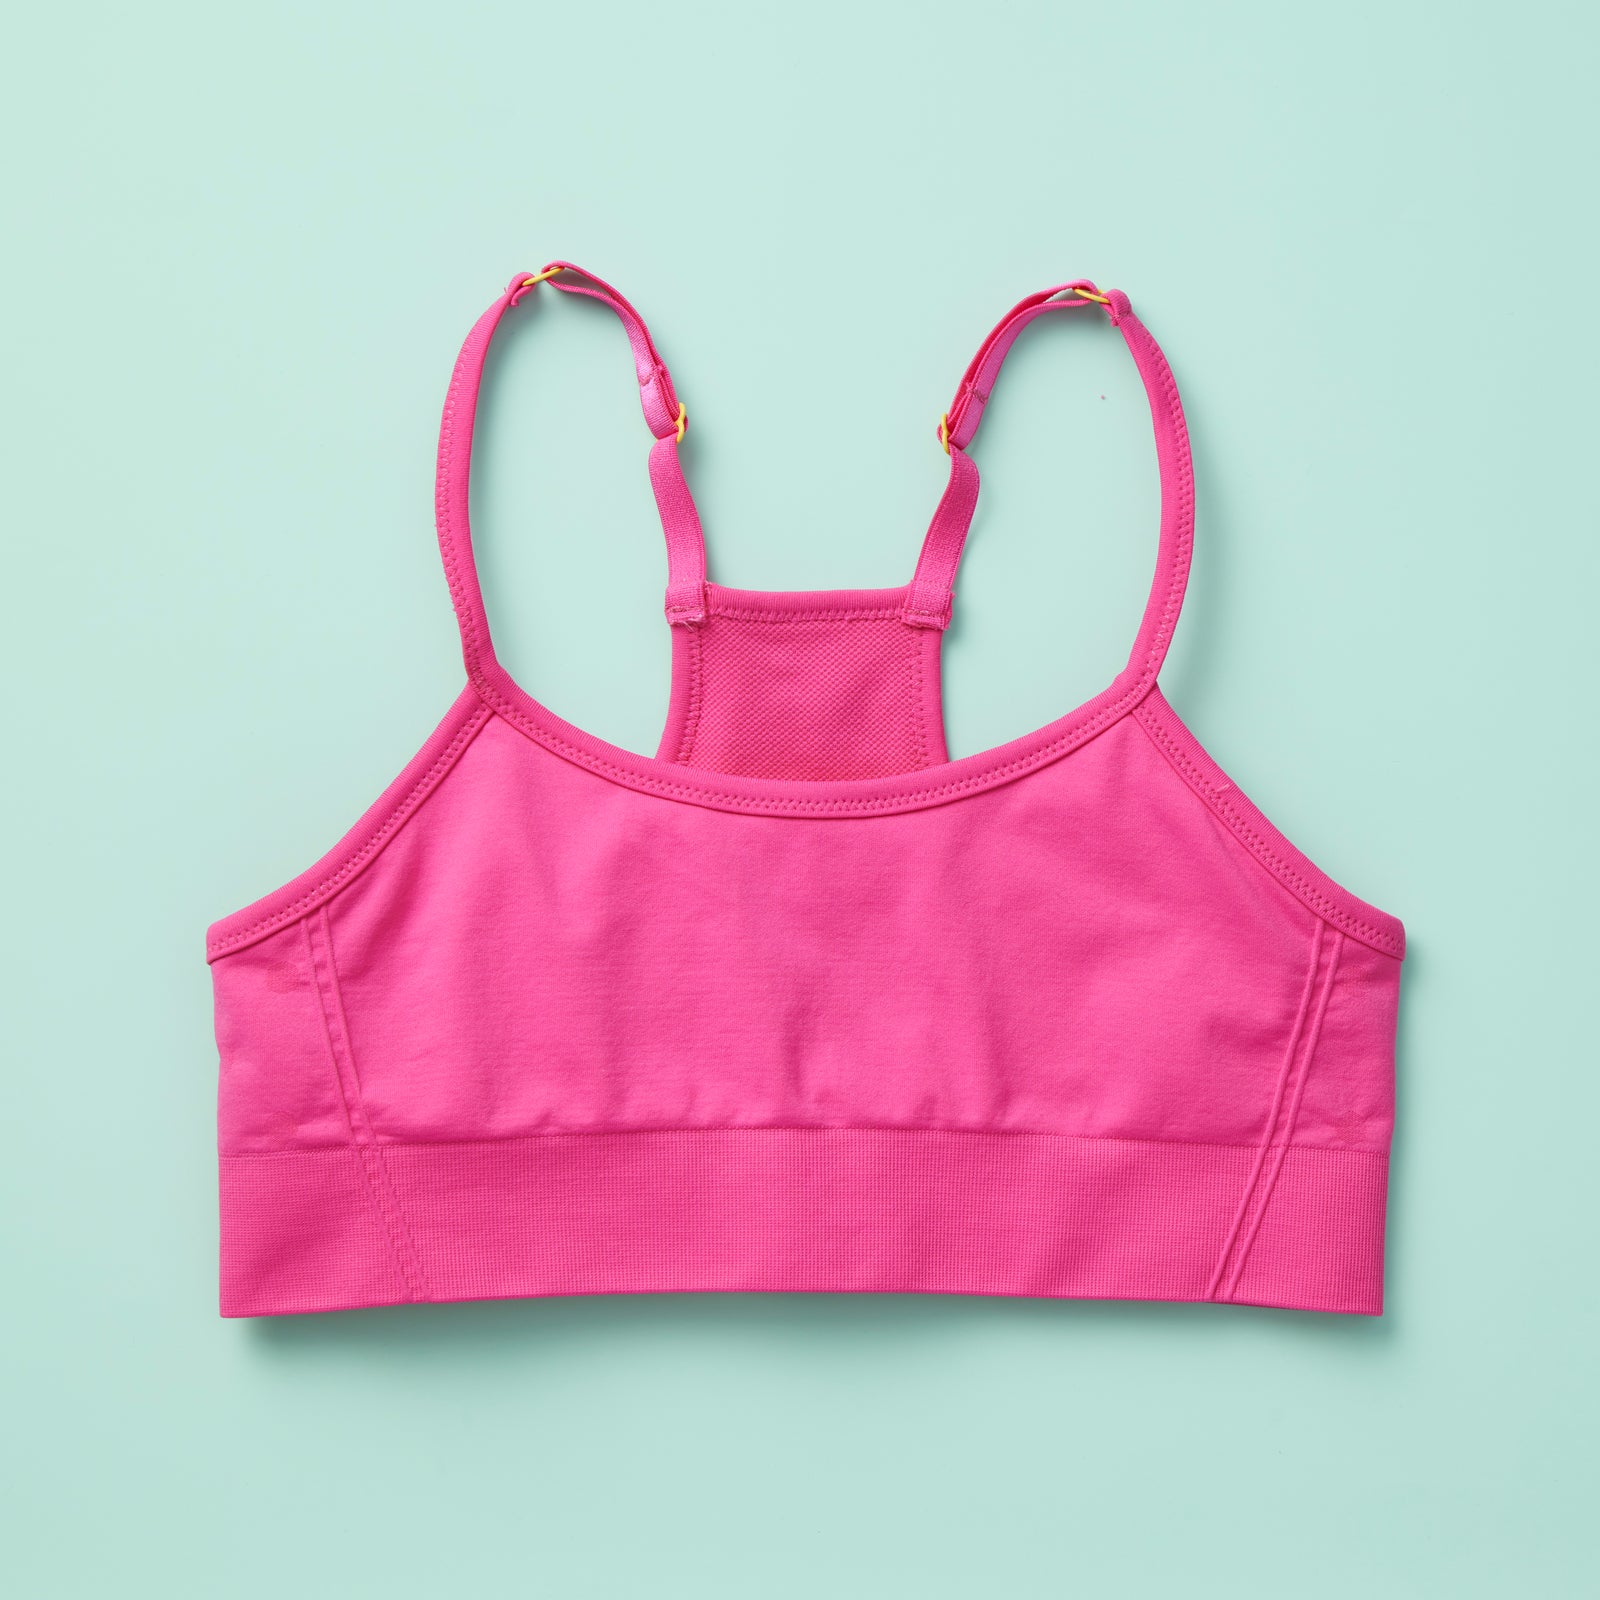 Tween Bras - Yellowberry Bras for Tweens and Girls. Best bra for girls  Tagged sports bra